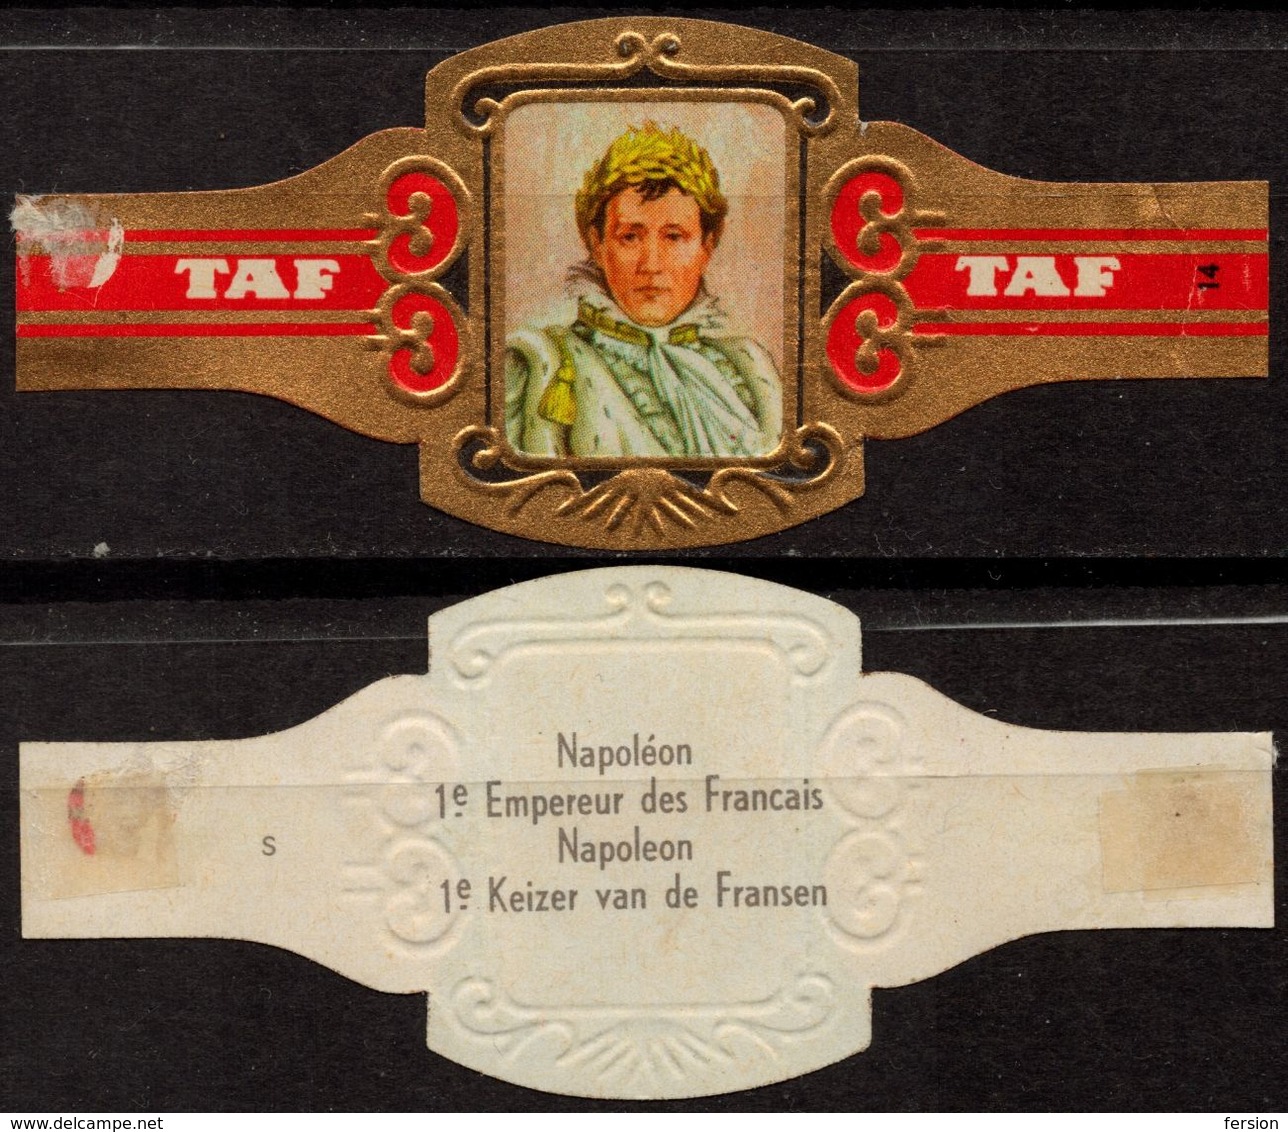 EMPEROR Napoleon - Belgium Belgique - TAF - CIGAR CIGARS Label Vignette - Etiketten